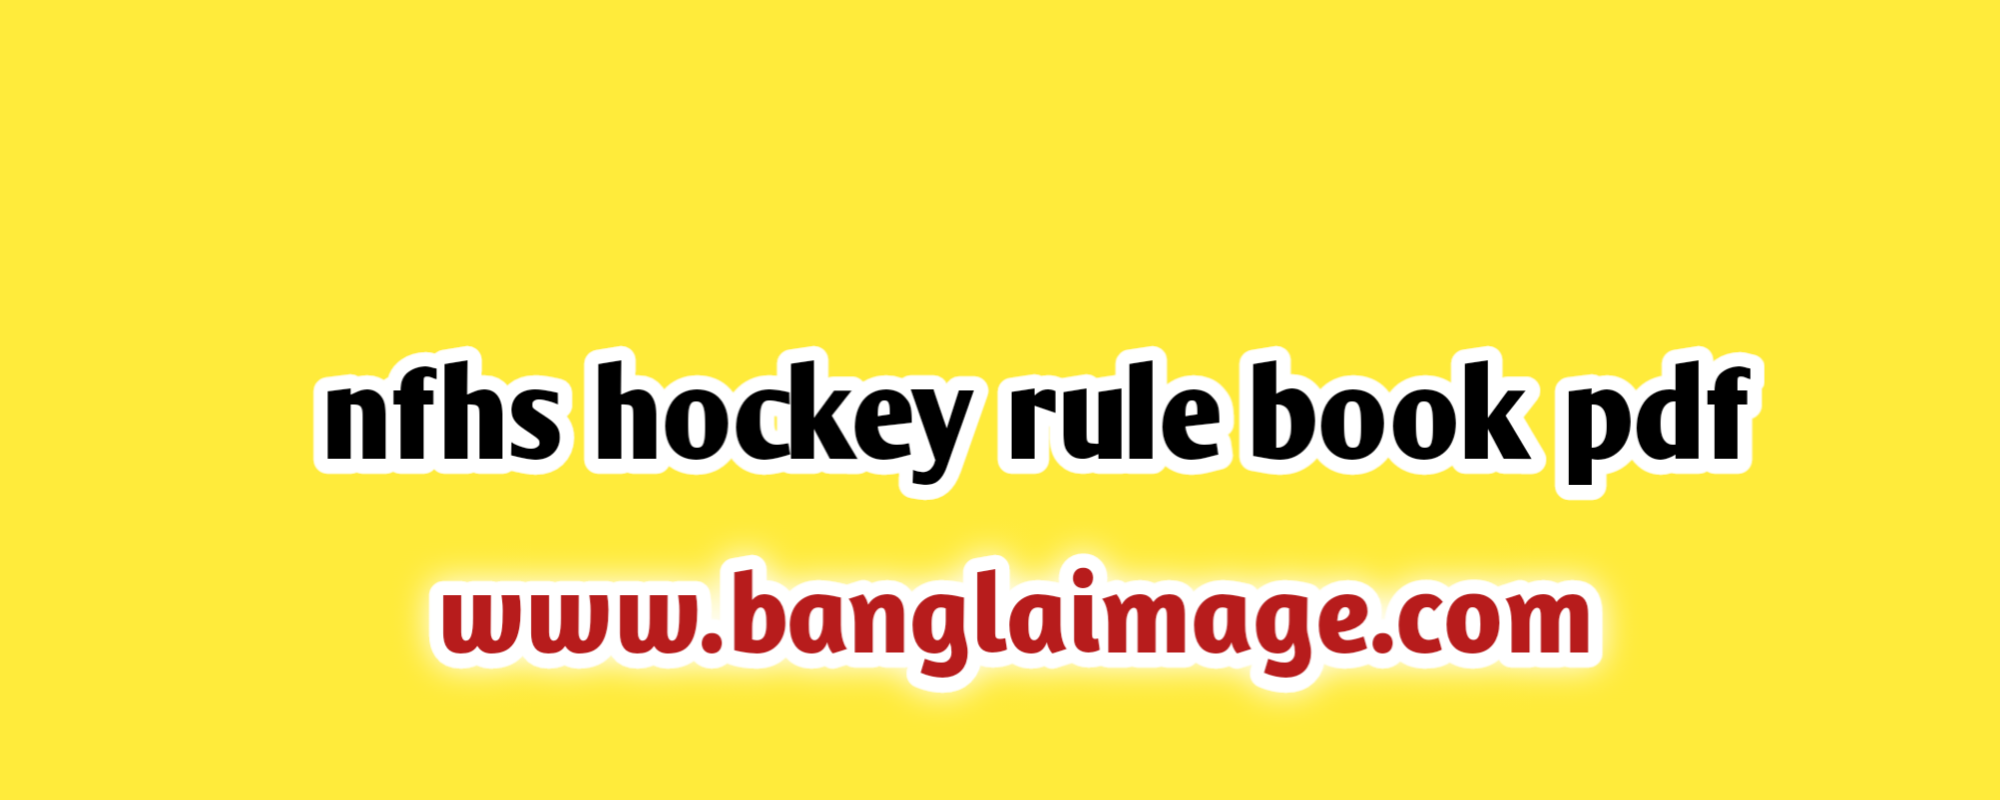 nfhs hockey rule book pdf, nfhs field hockey rule book, usa hockey rules, nfhs hockey rules